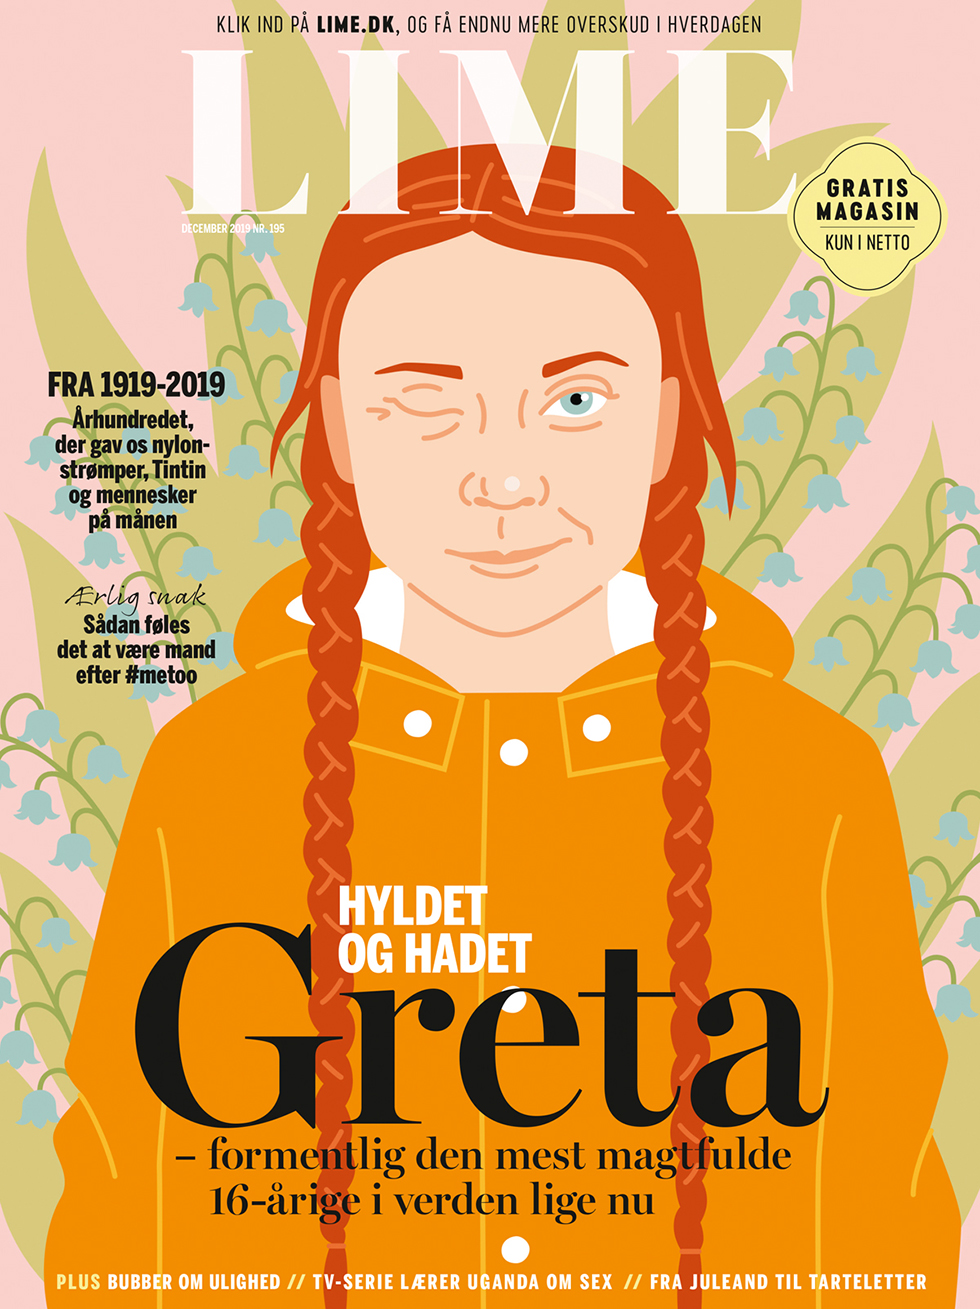 Greta Thunberg portrait